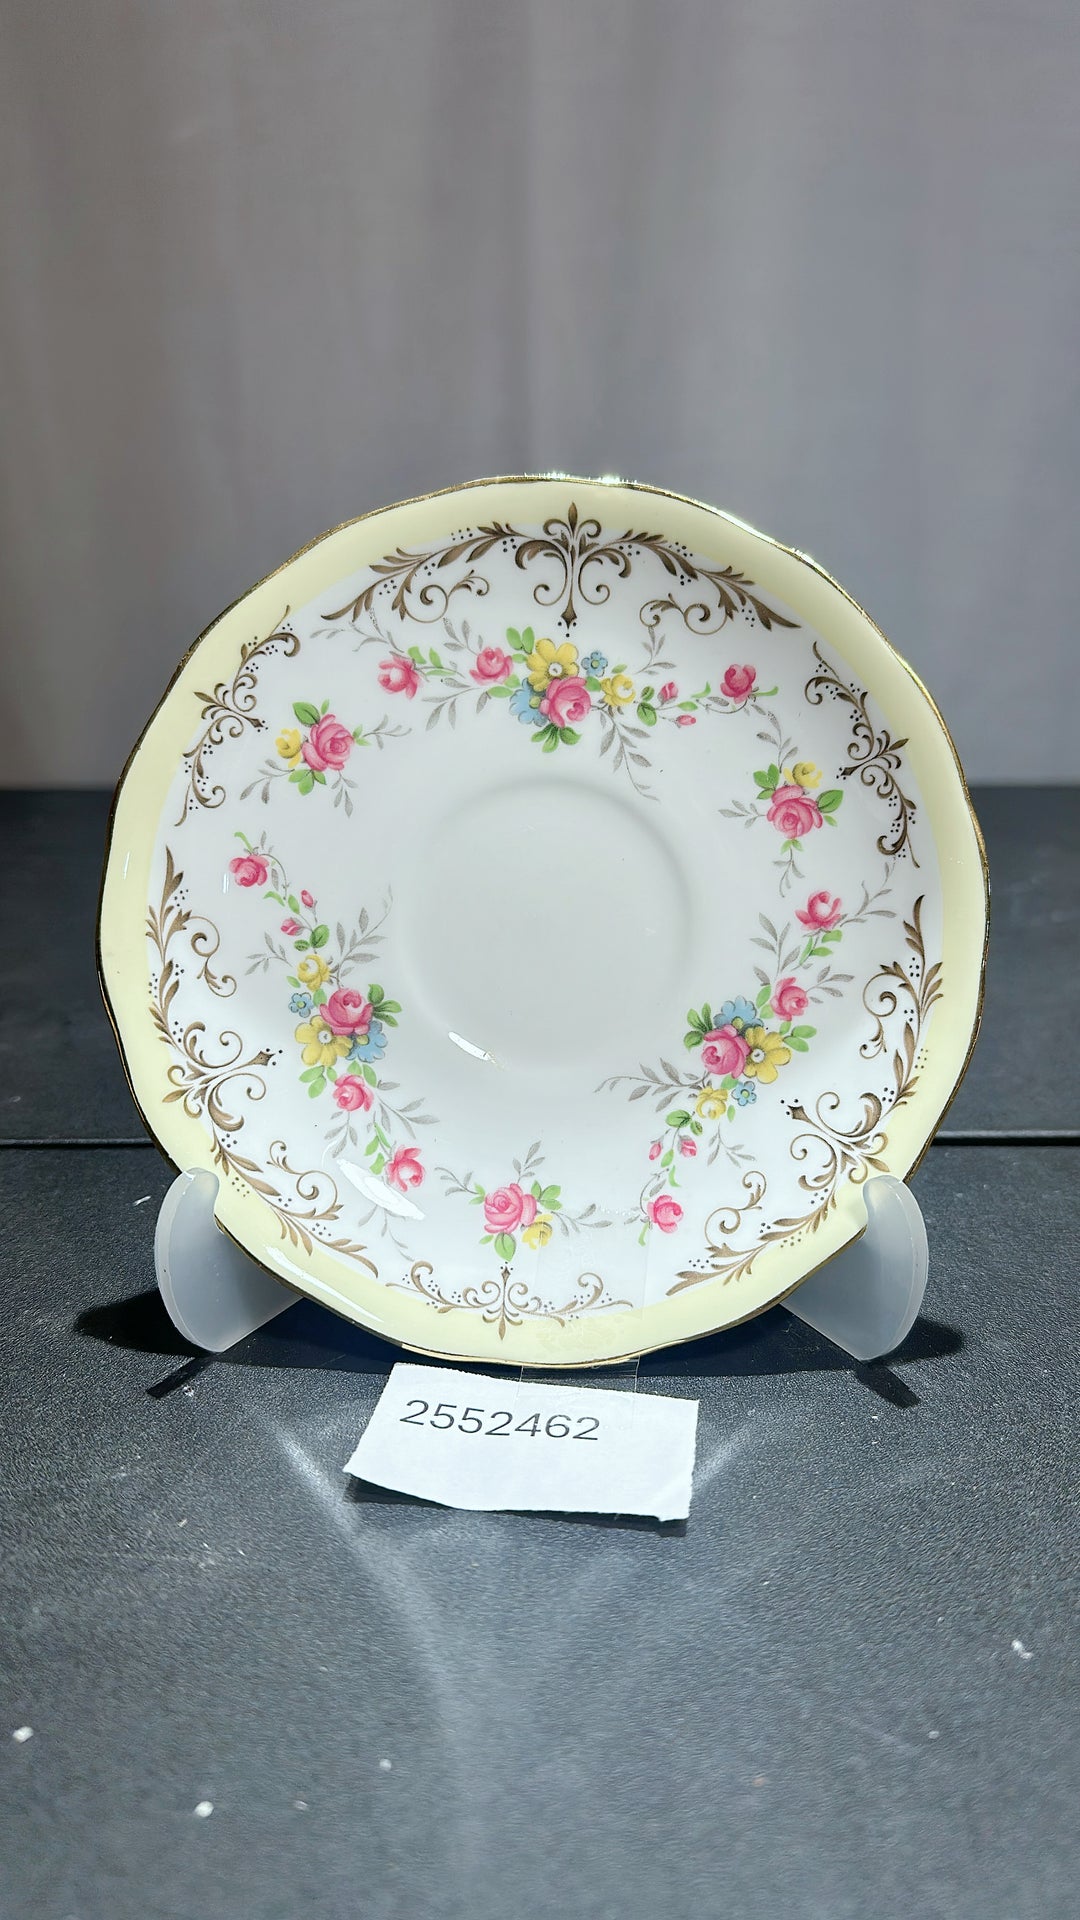 Antique Plate 2552462